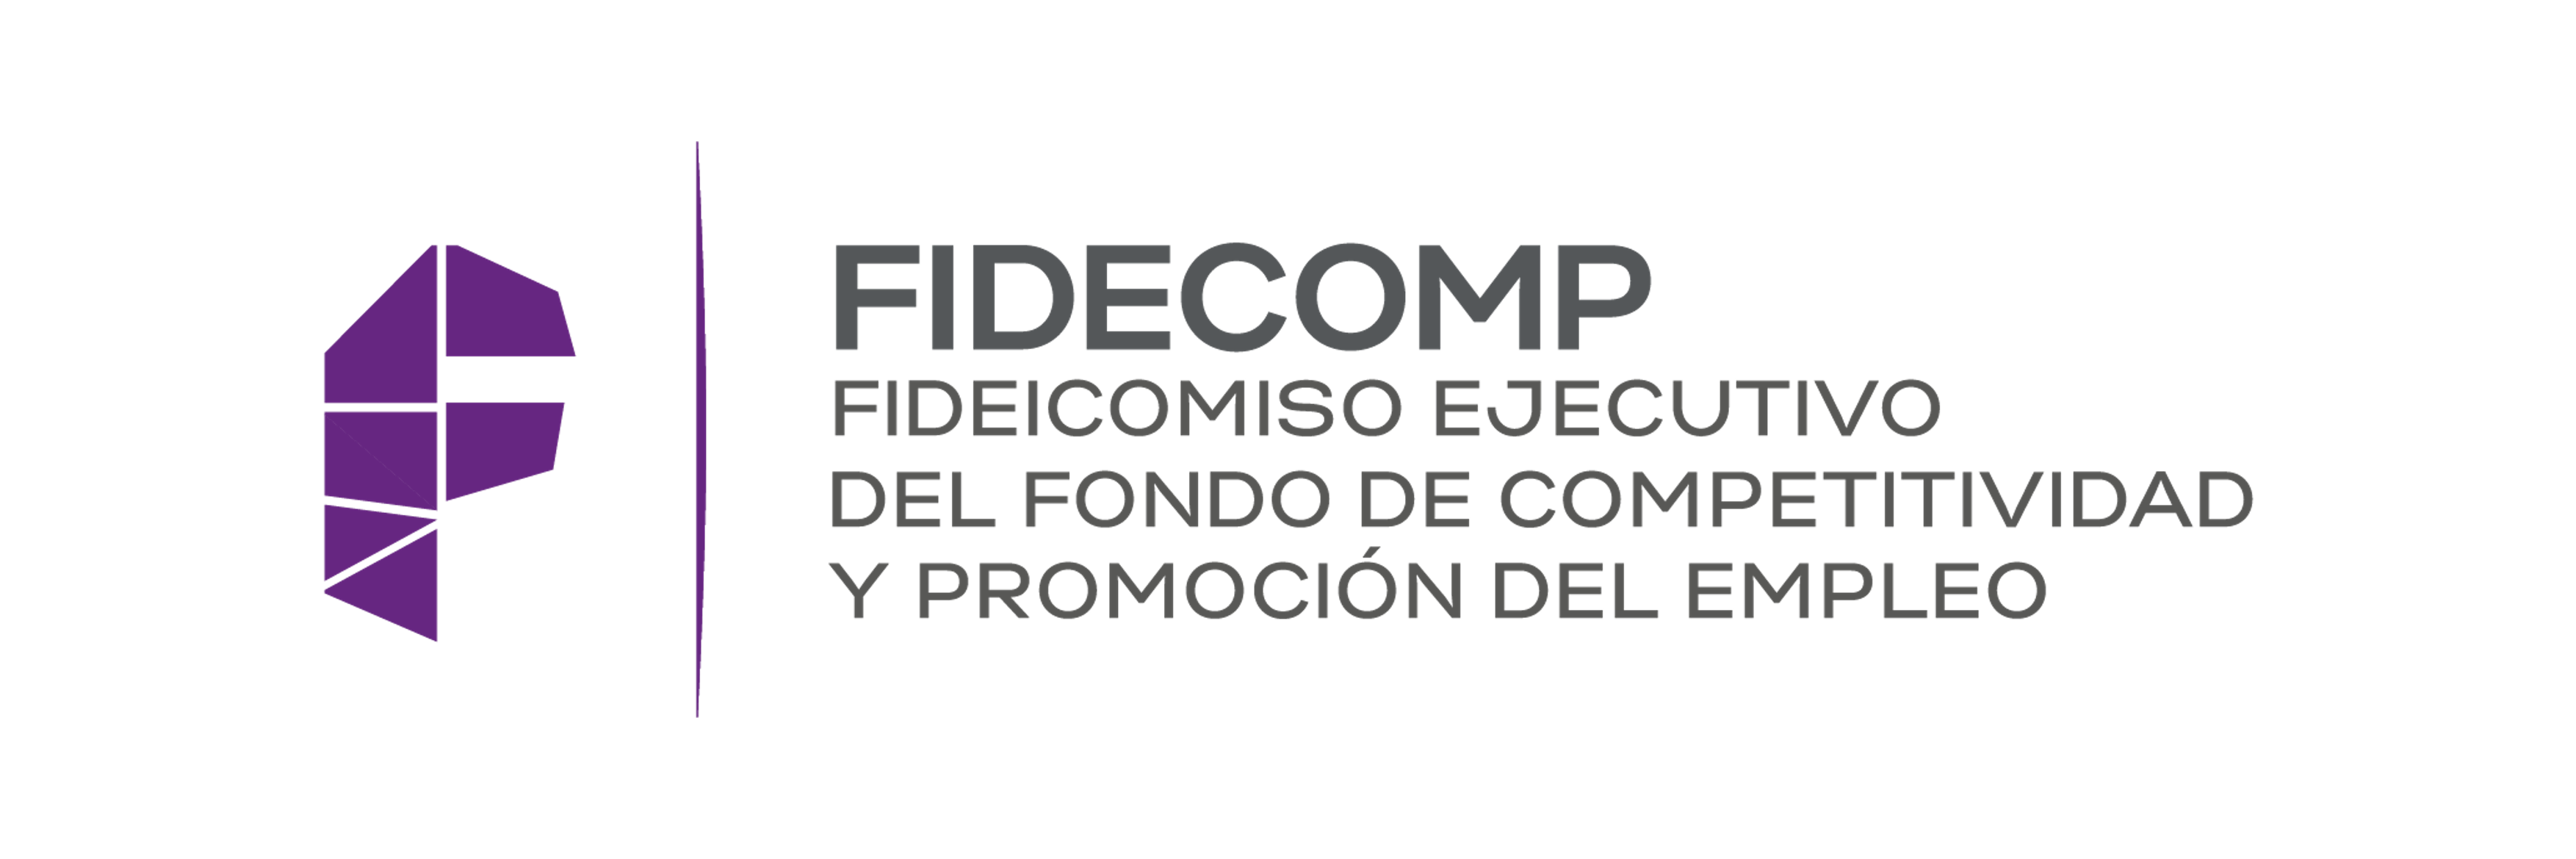 Fidecomp